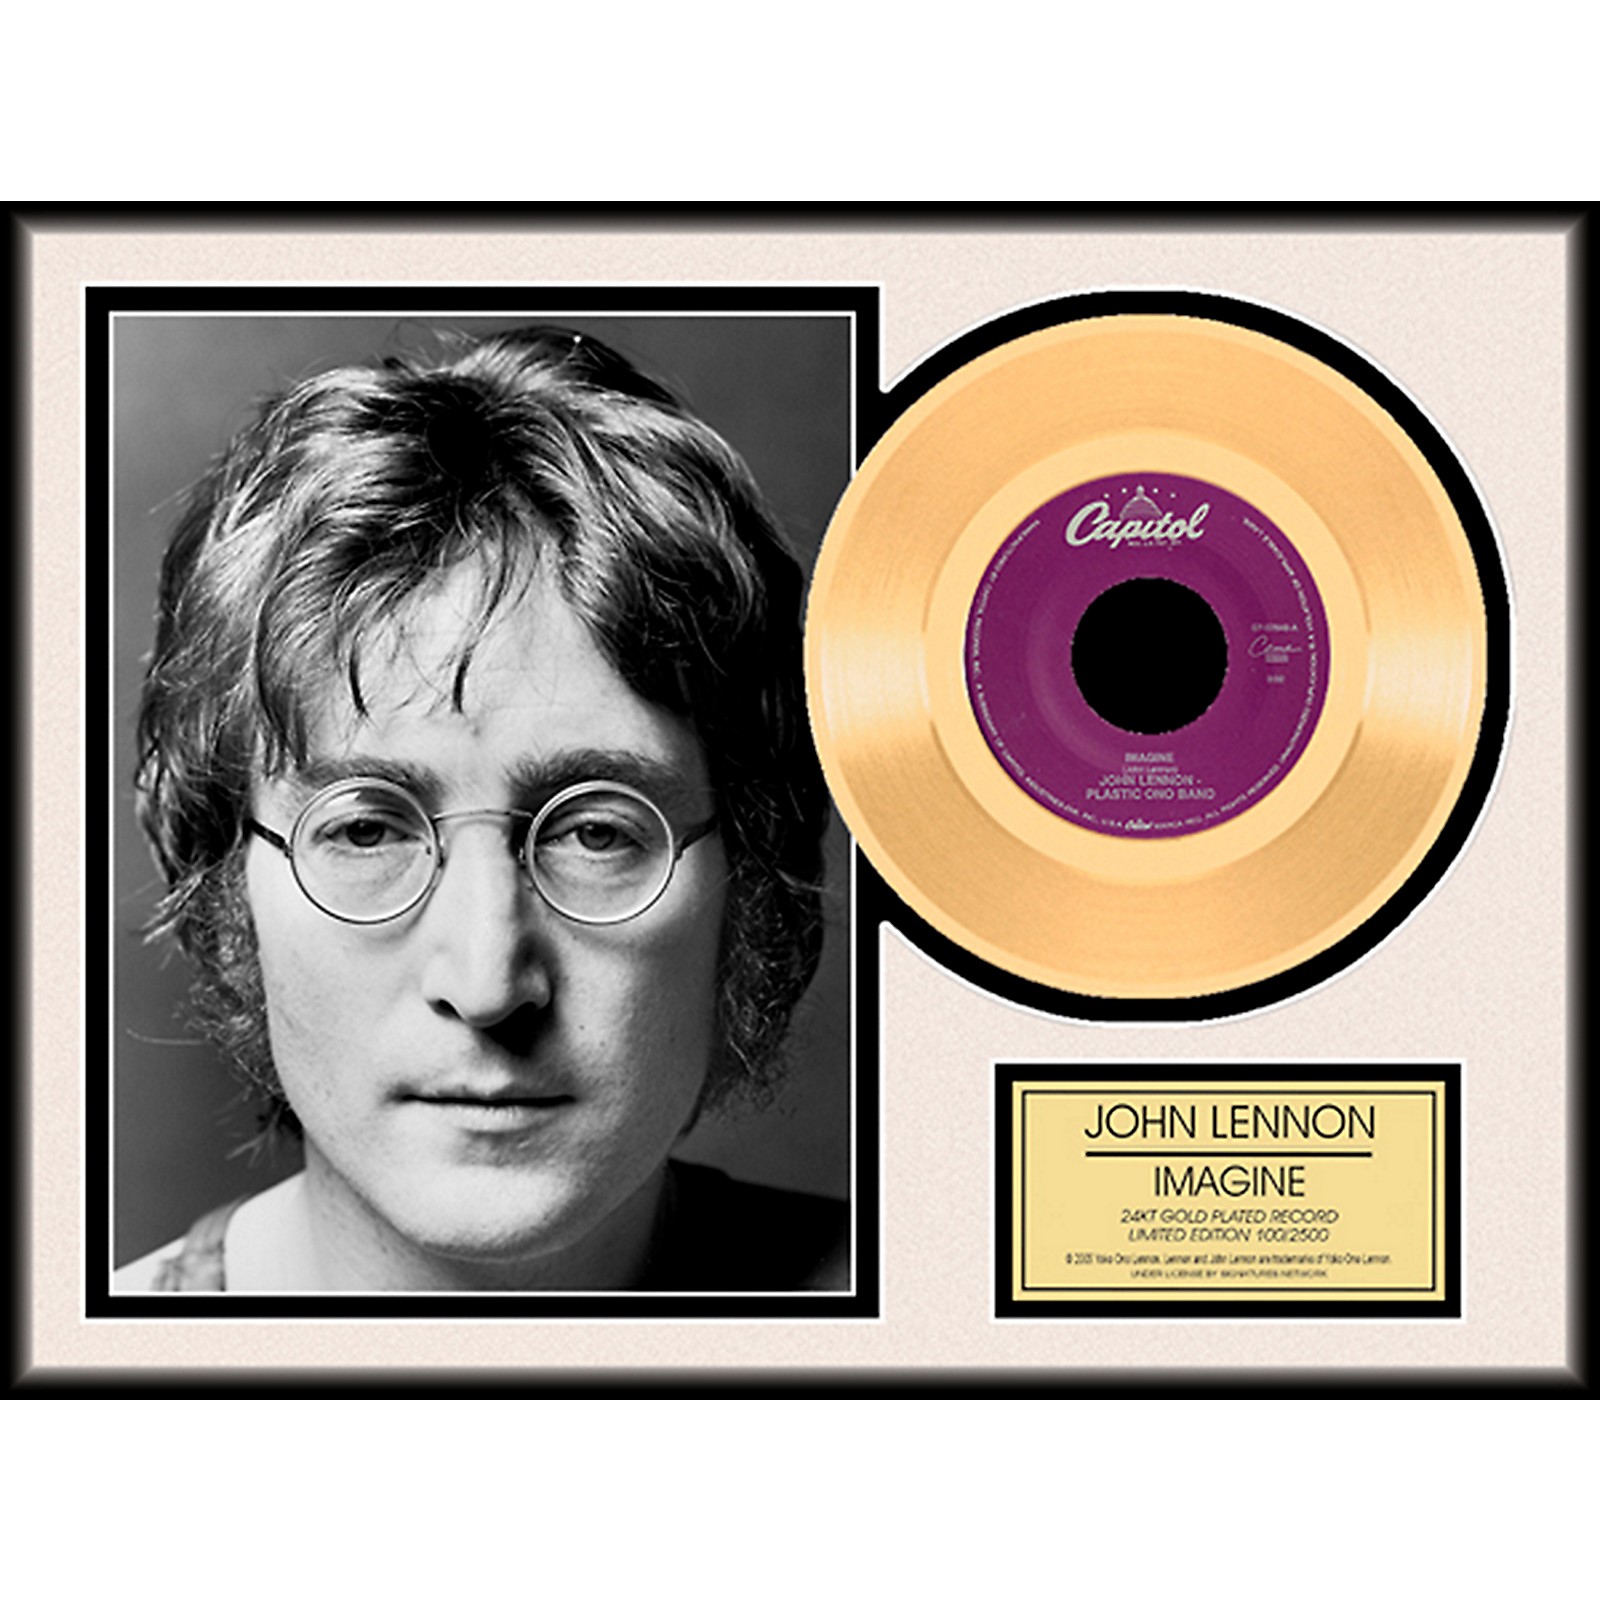 Gold imagine. Джон Леннон Леннон имейджн. Imagine альбом Джона Леннона. Джон Леннон в 70-х. 24kt Gold Plated record Limited Edition John Lennon.